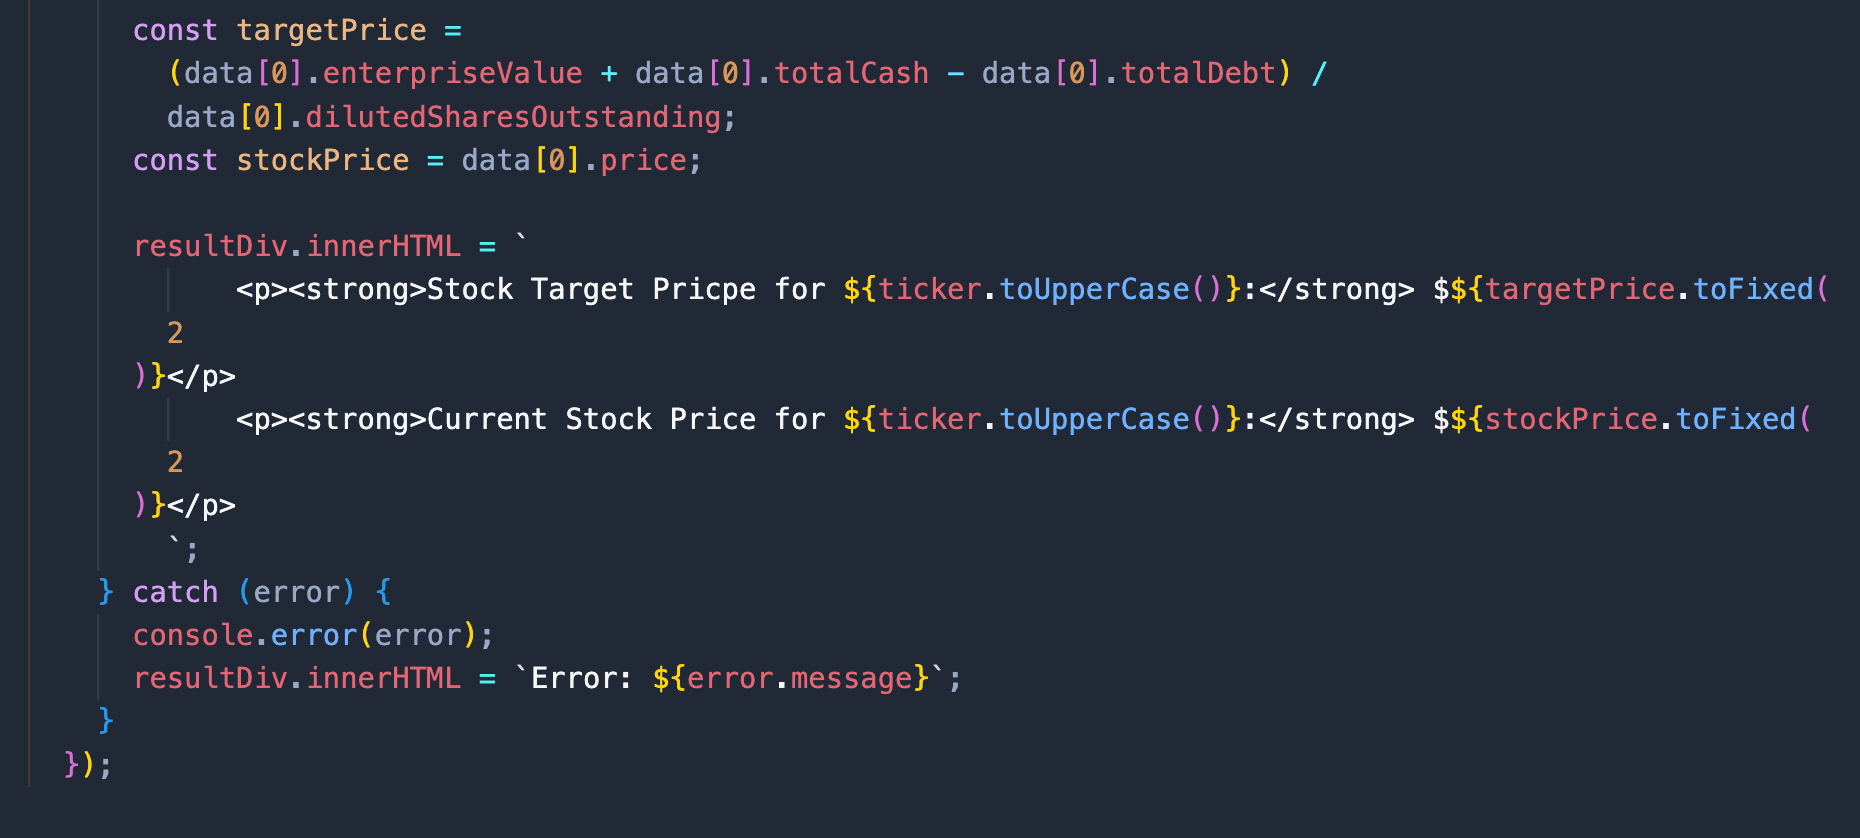 stock target price calculation using javascript code